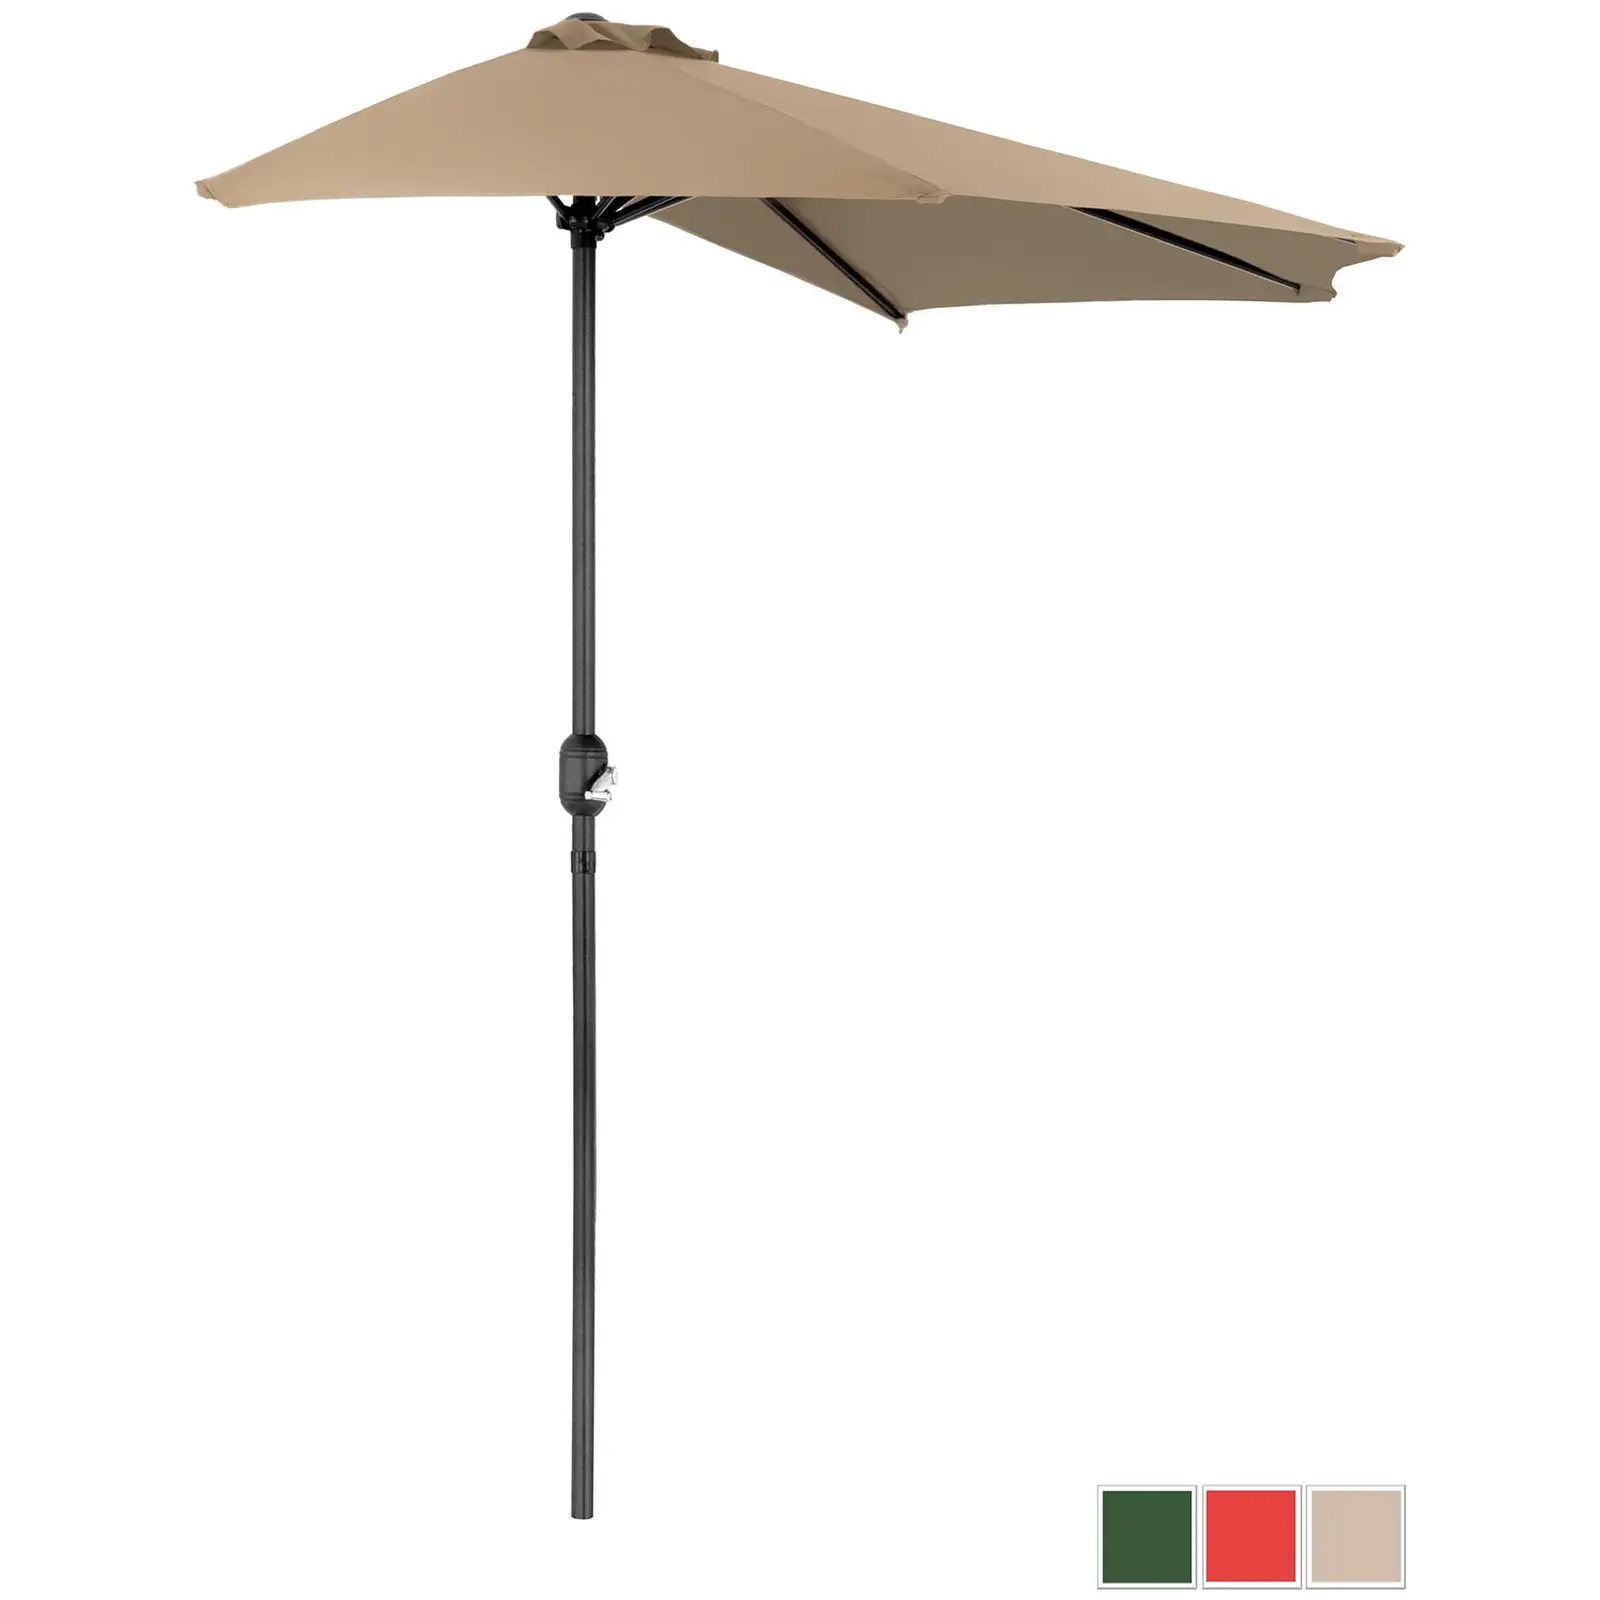 Aurinkovarjo puolikas - ruskeanharmaa - viisikulmainen - 270 x 135 cm